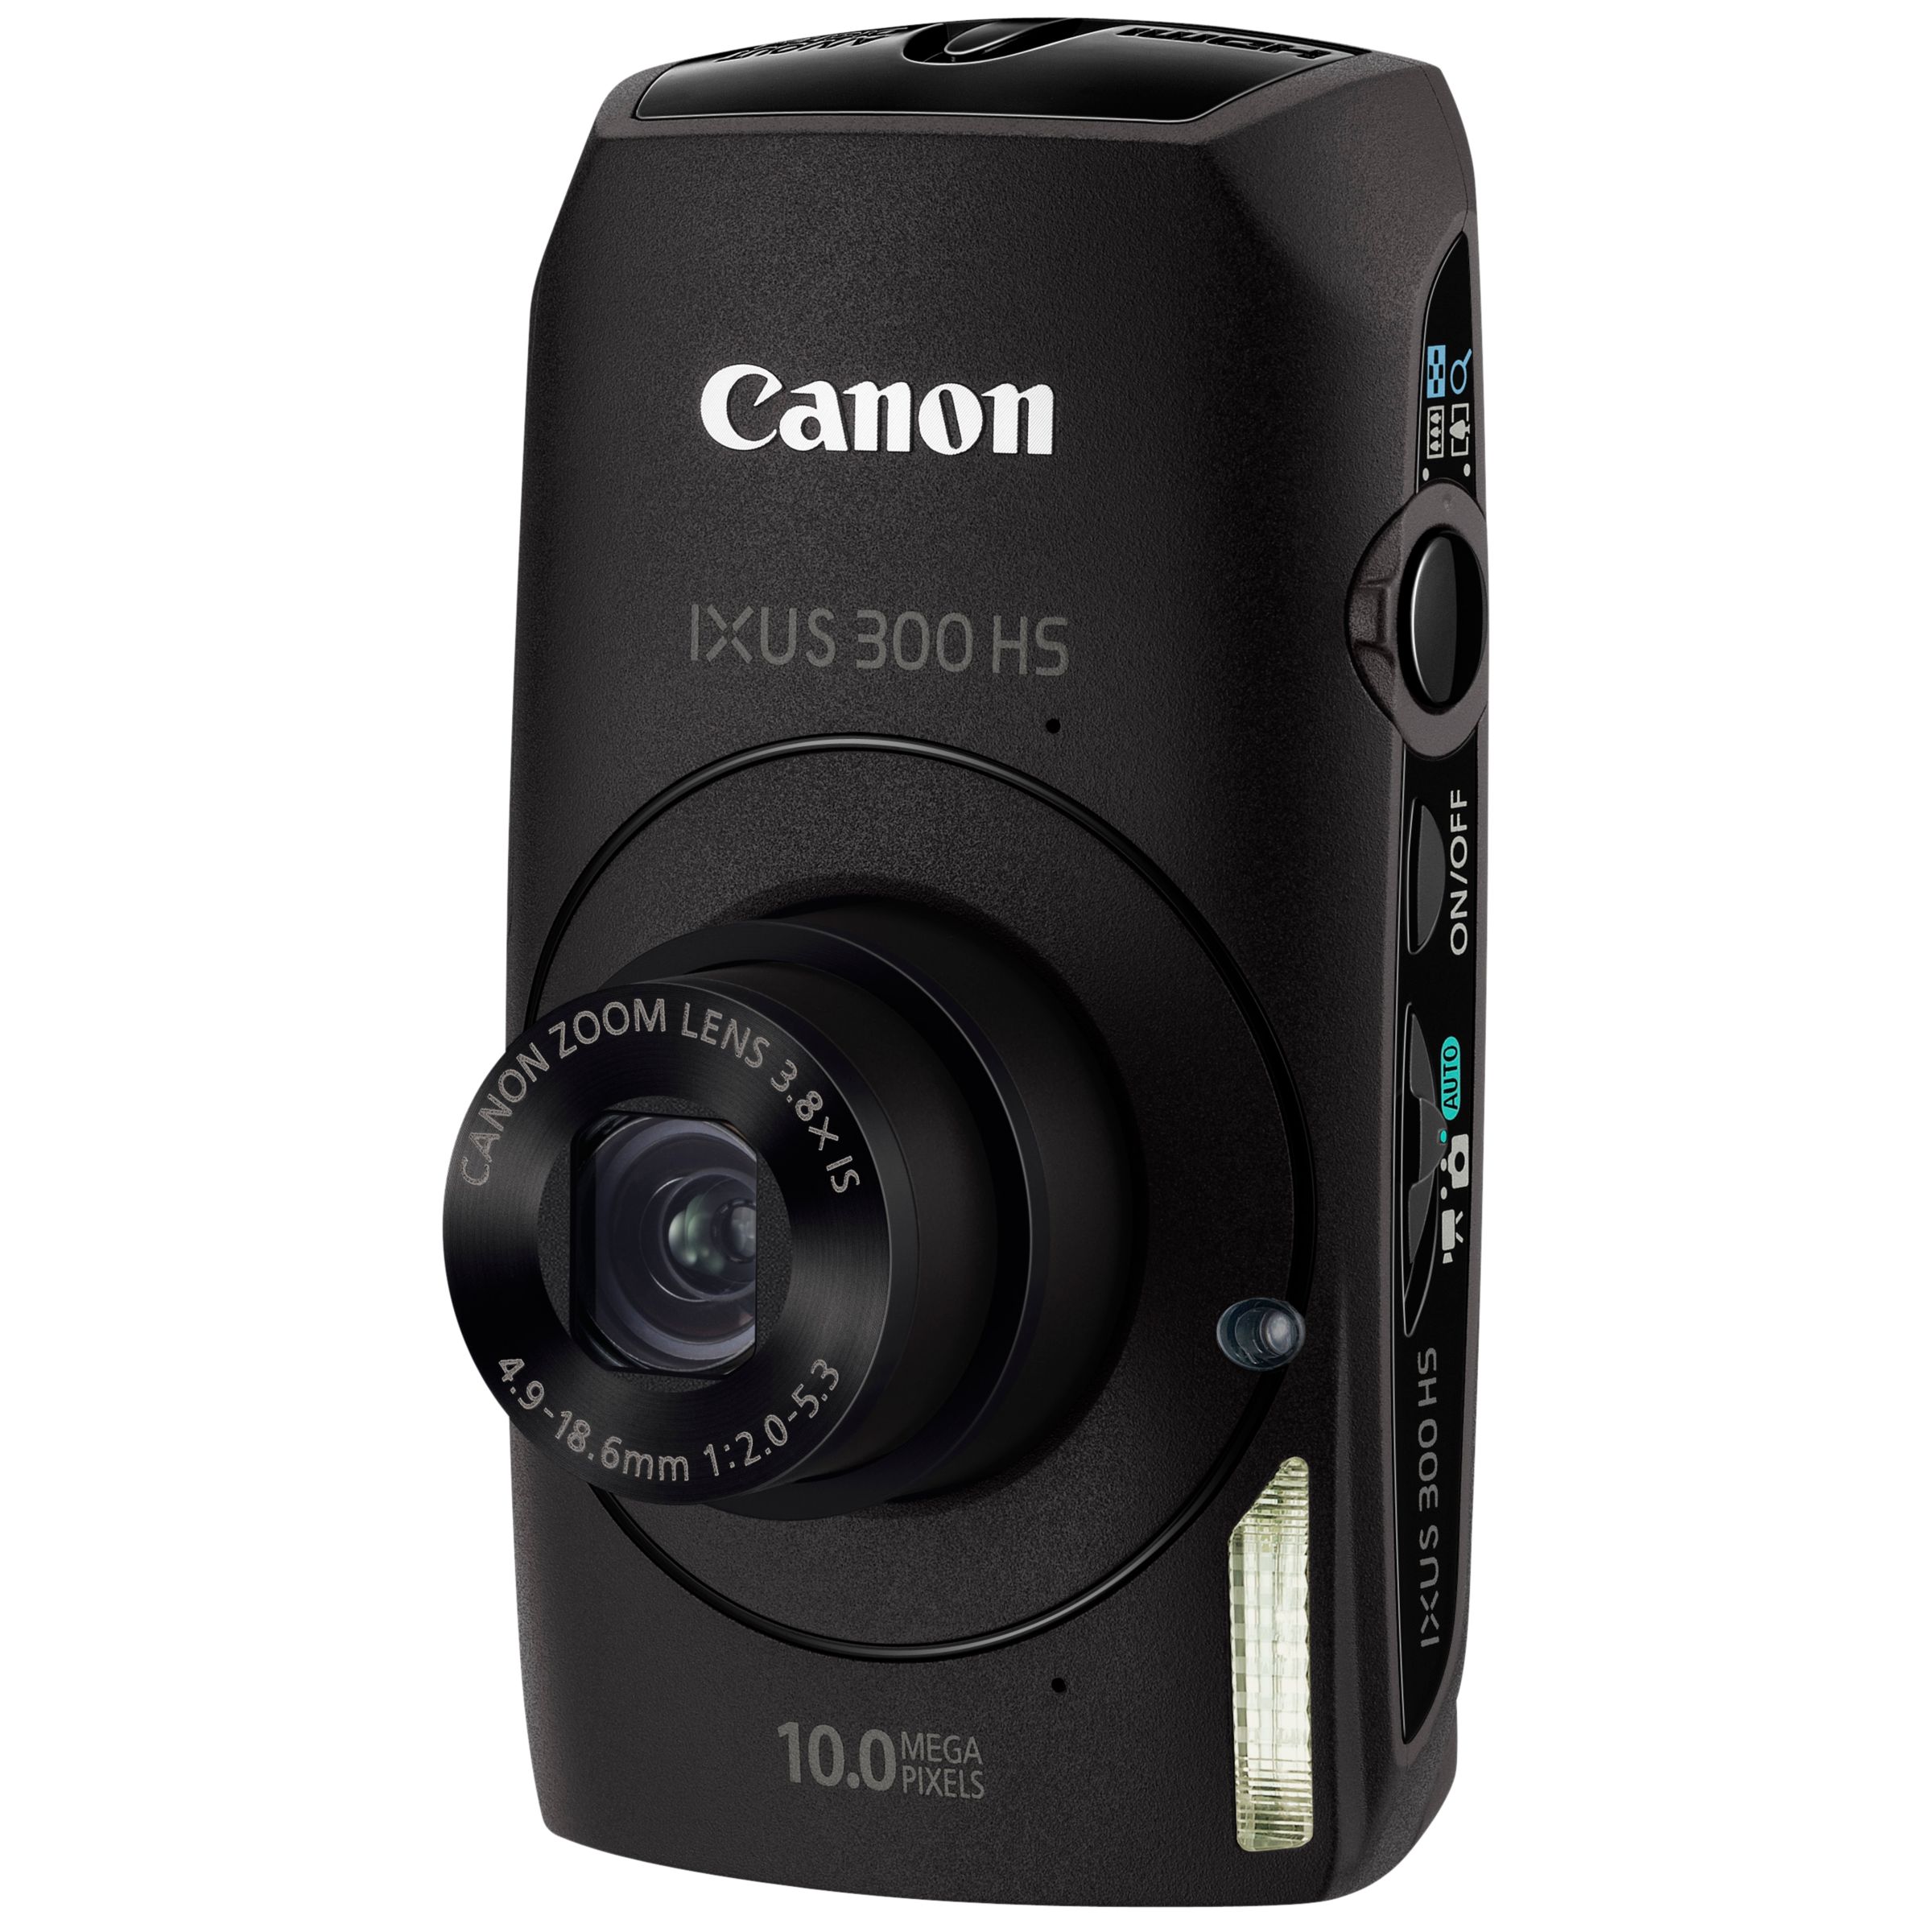 Canon IXUS 300 HS Digital Camera, Black at John Lewis